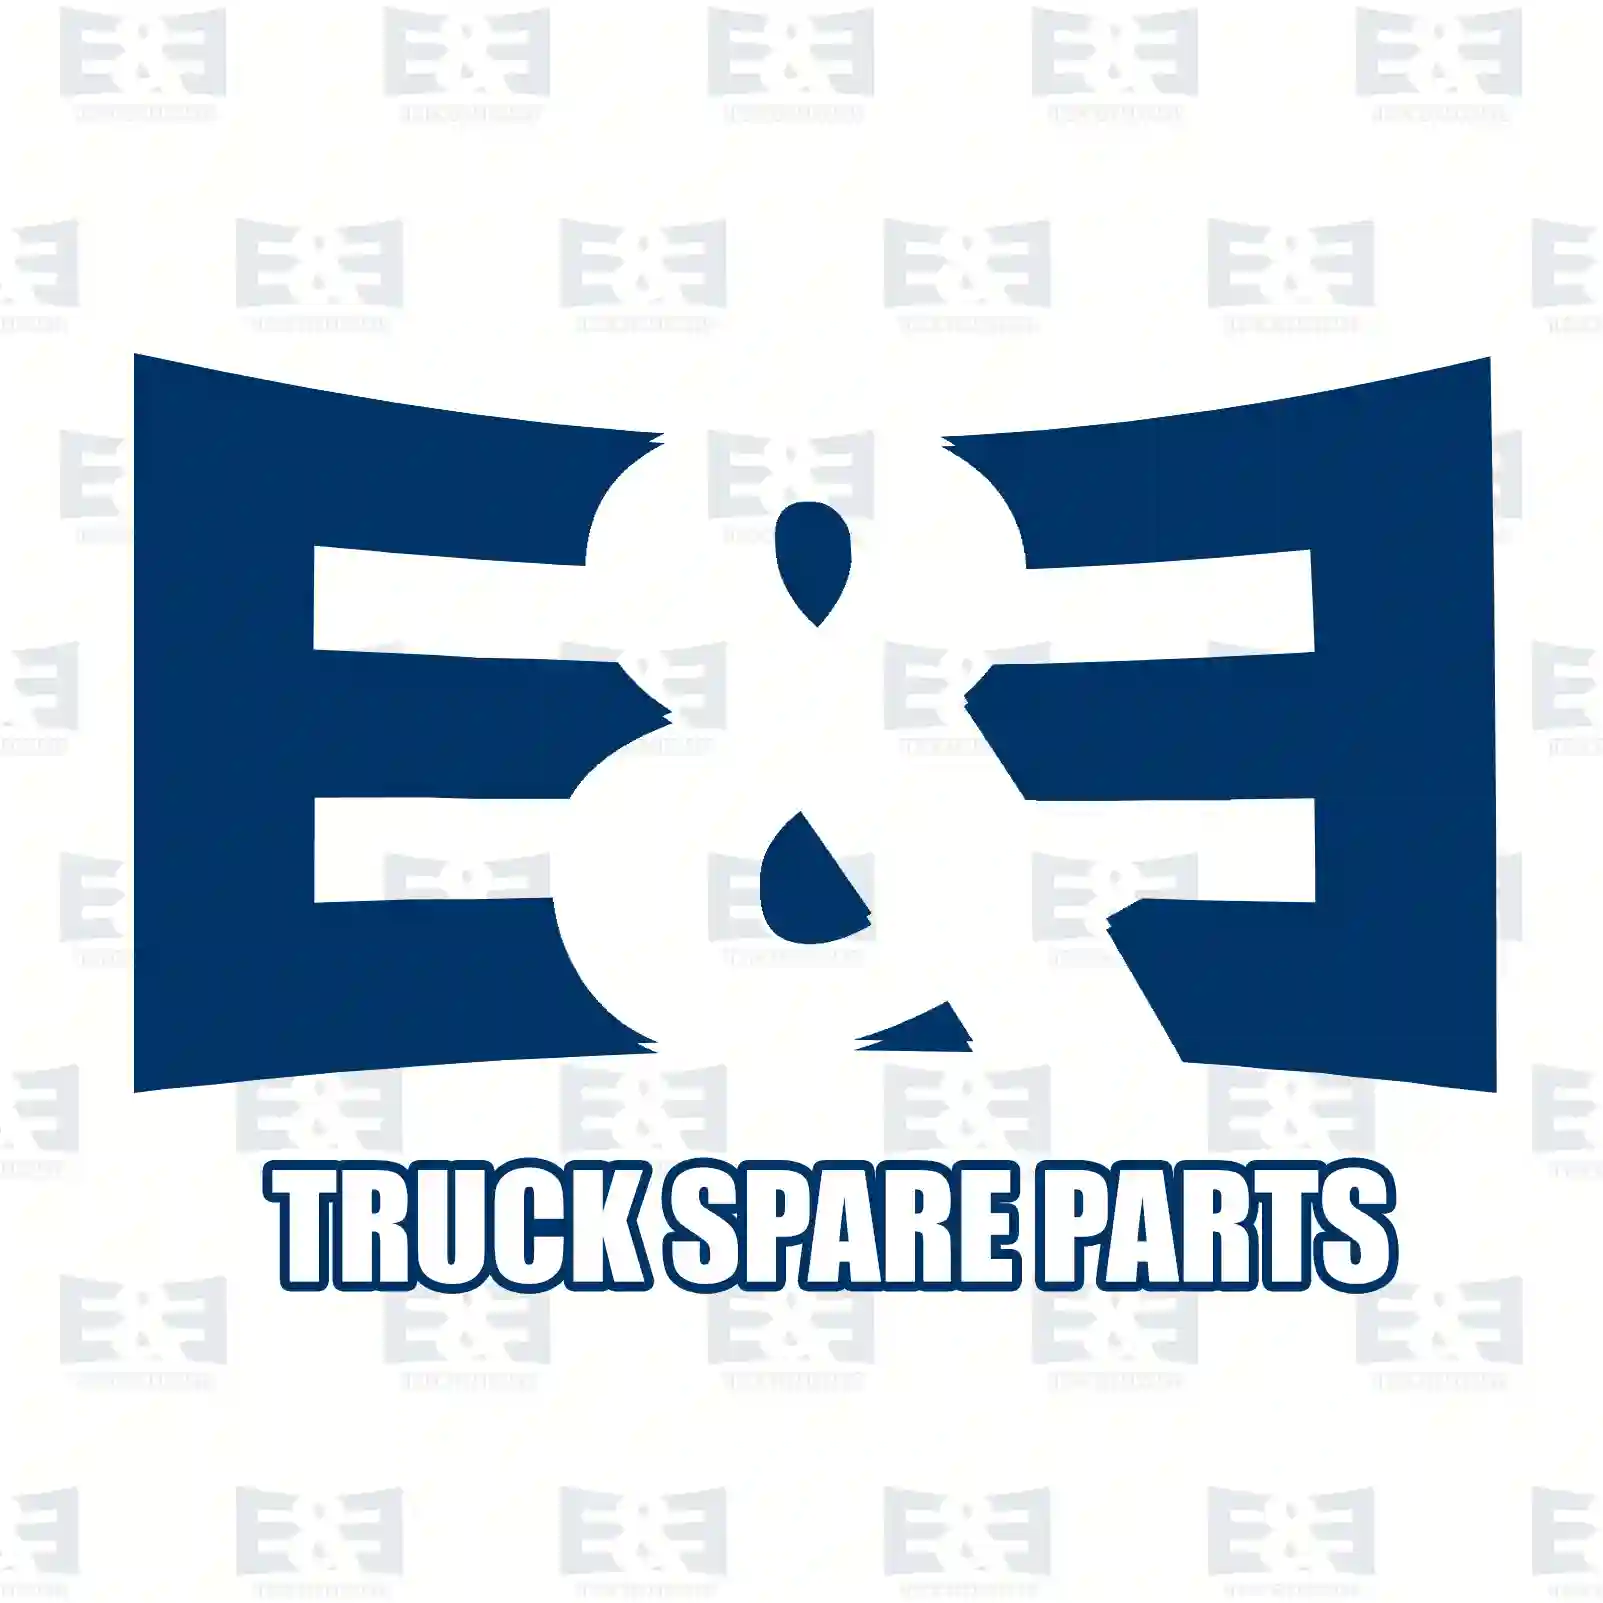 Input shaft, 2E2278858, 1656031 ||  2E2278858 E&E Truck Spare Parts | Truck Spare Parts, Auotomotive Spare Parts Input shaft, 2E2278858, 1656031 ||  2E2278858 E&E Truck Spare Parts | Truck Spare Parts, Auotomotive Spare Parts